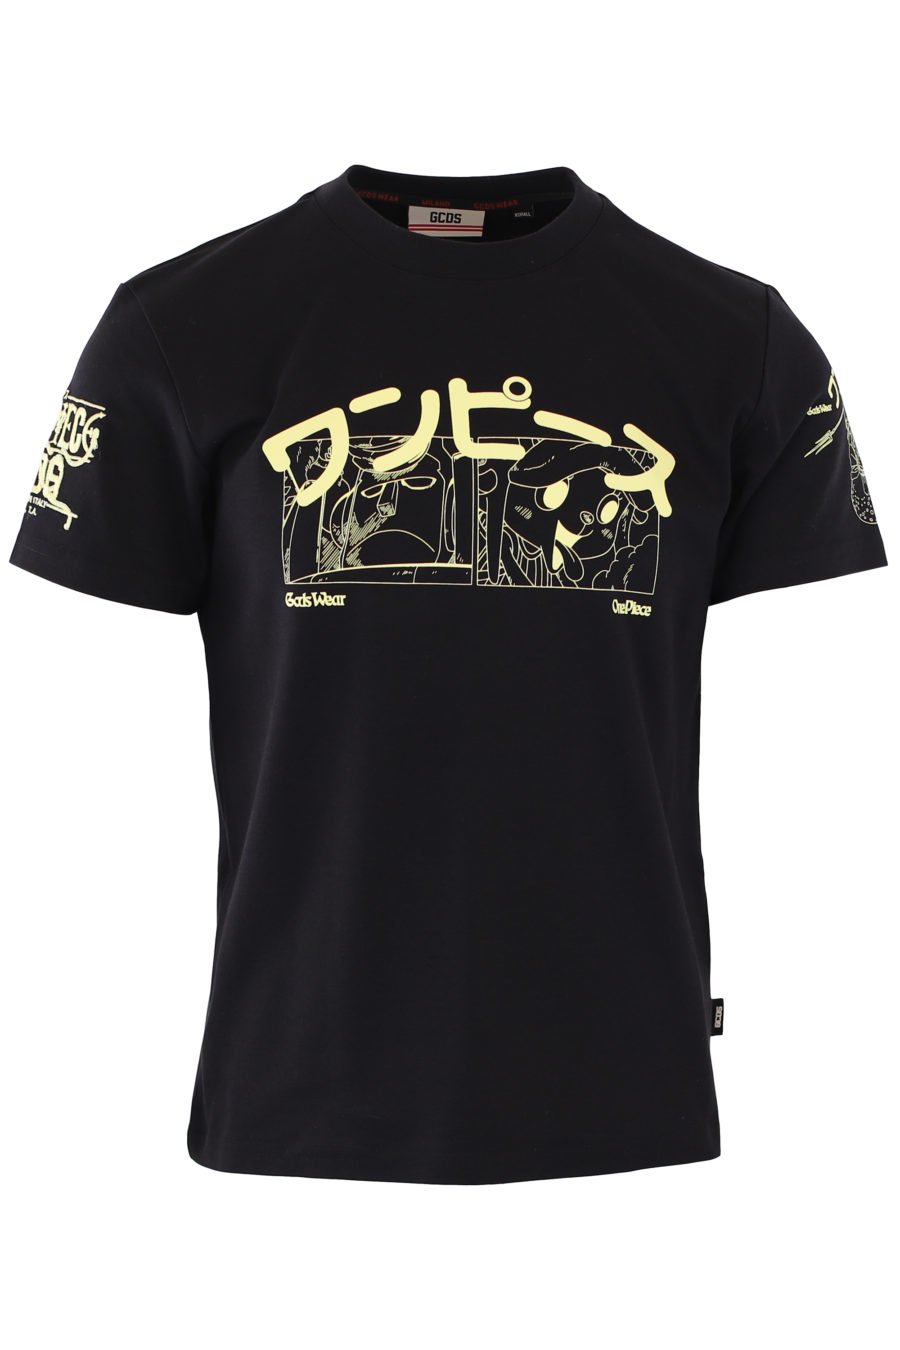 Camiseta negra con estampado anime amarillo - IMG 1113